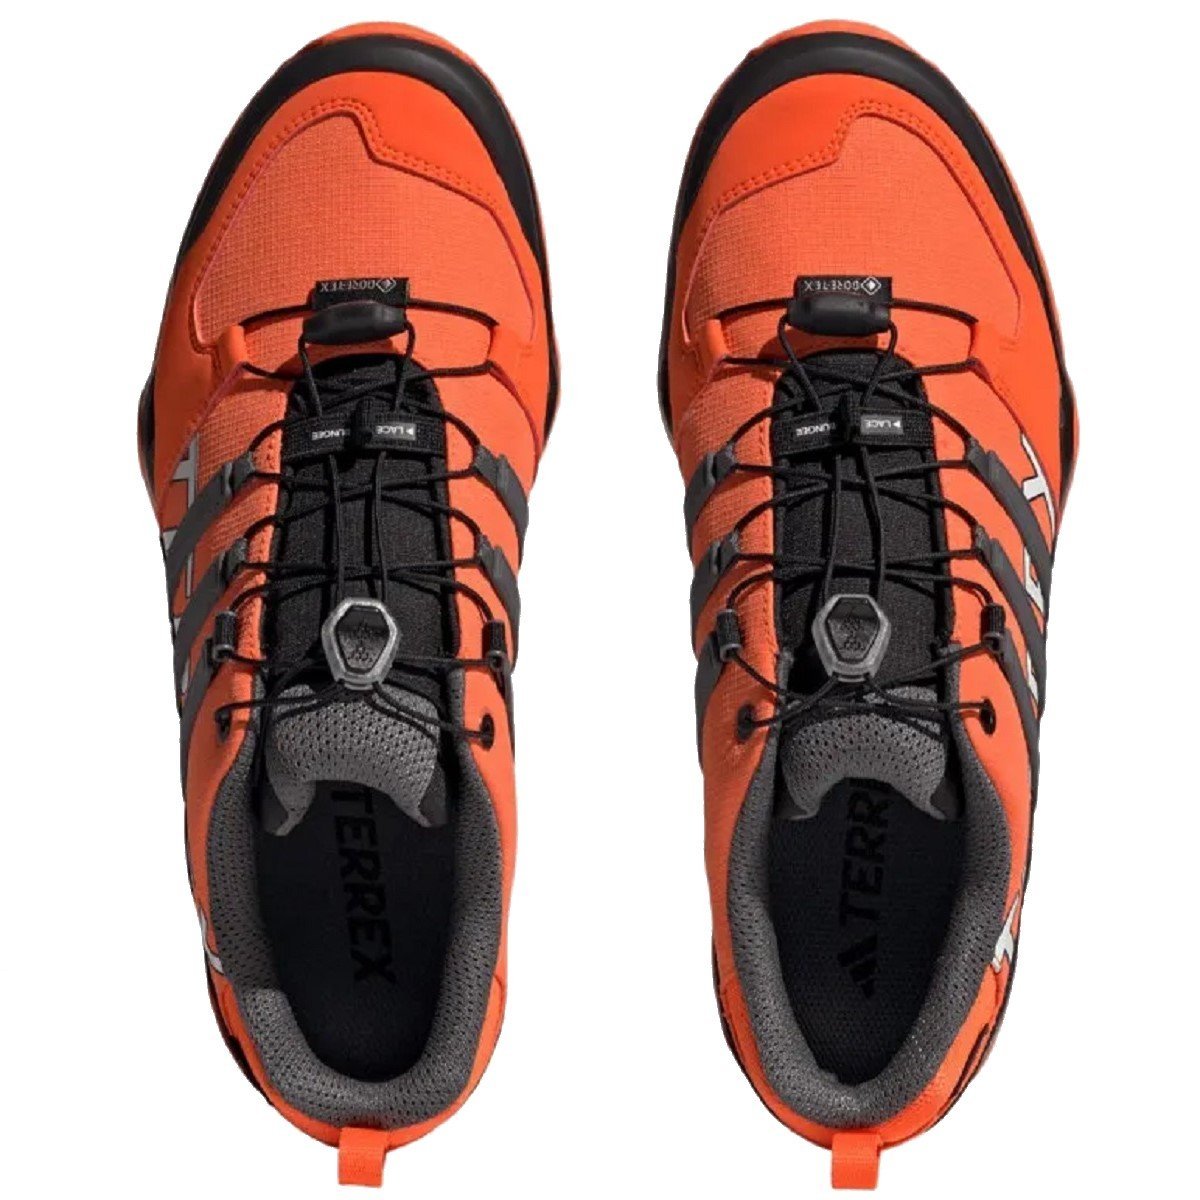 Obuv Adidas Terrex Swift R2 GTX M - oranžová/čierna